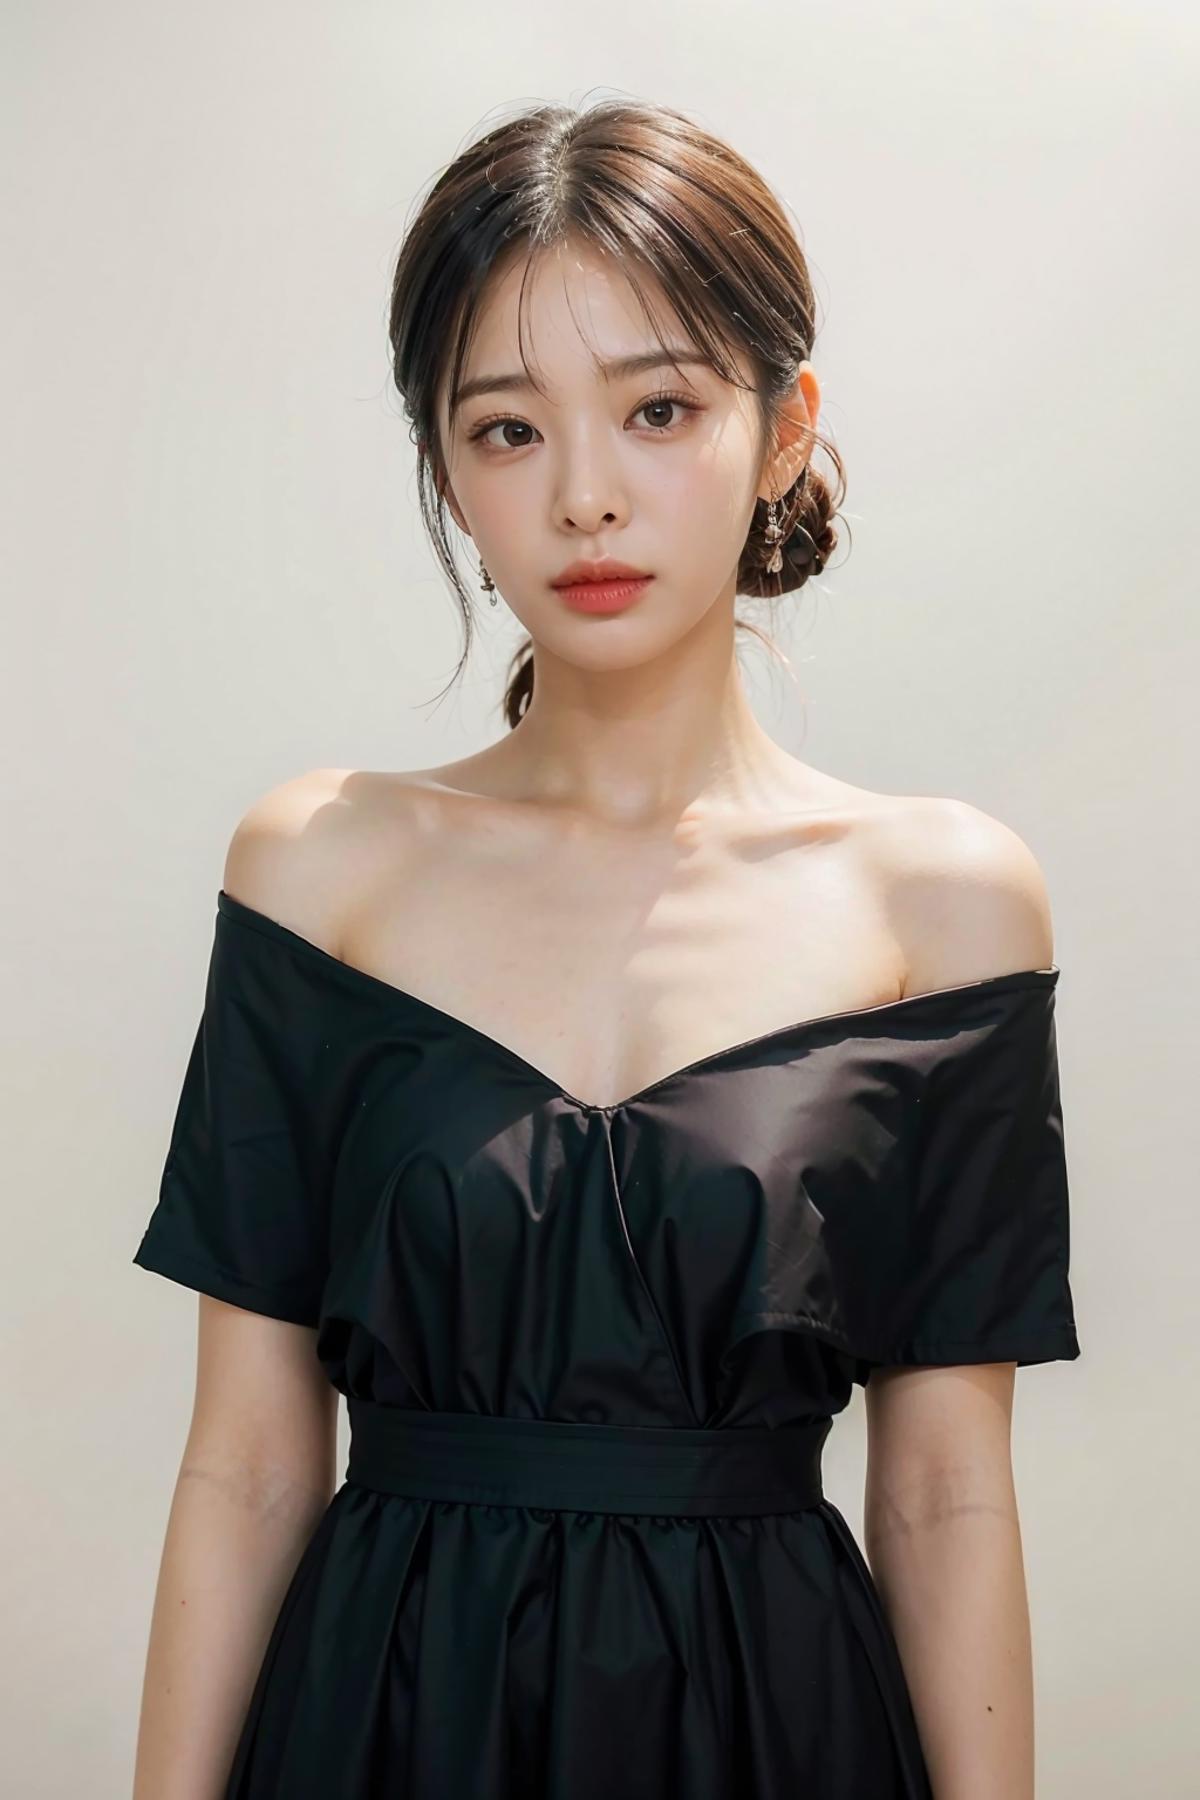 Seol In ah Actress (Korean) image by Steven_Rogers_TH